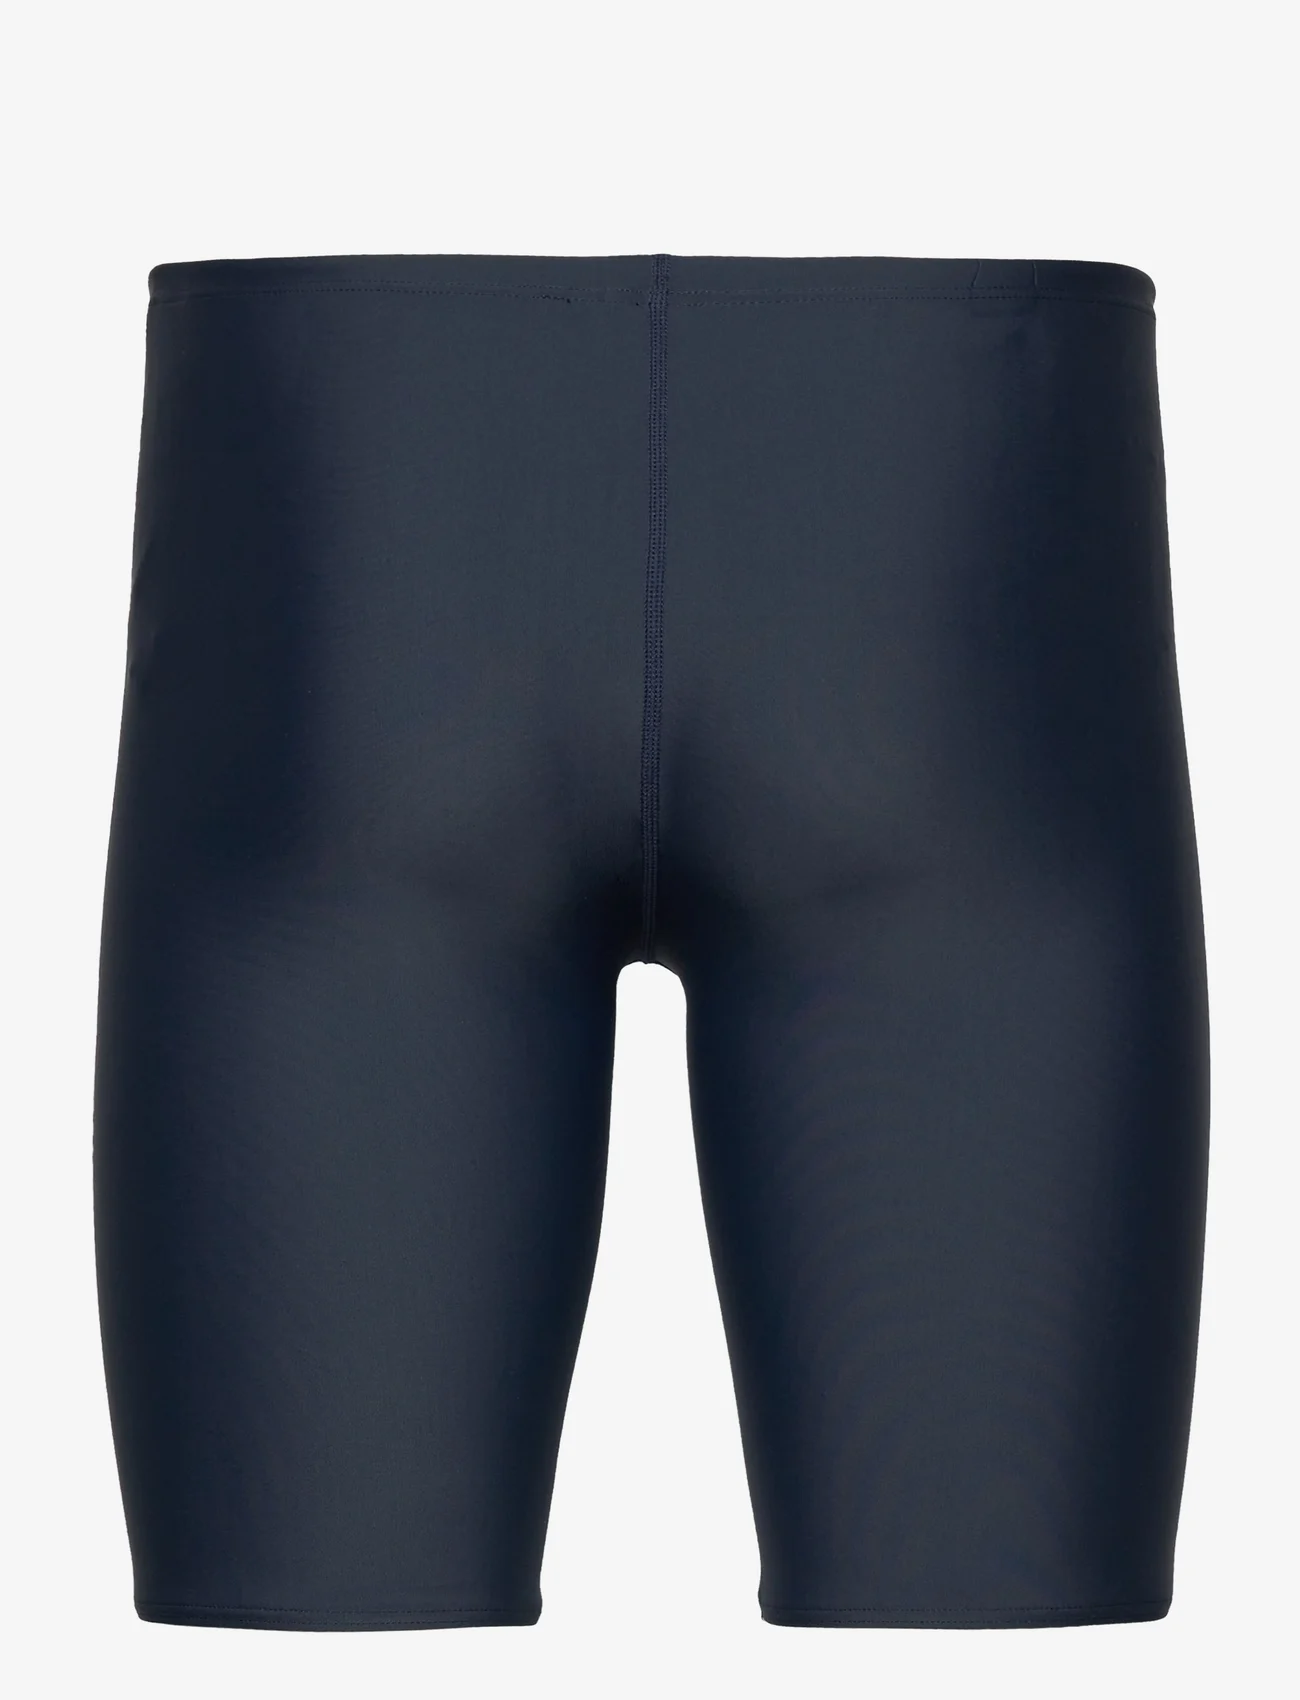 Rip Curl - CORP SWIM SHORT - swim shorts - dark navy - 1